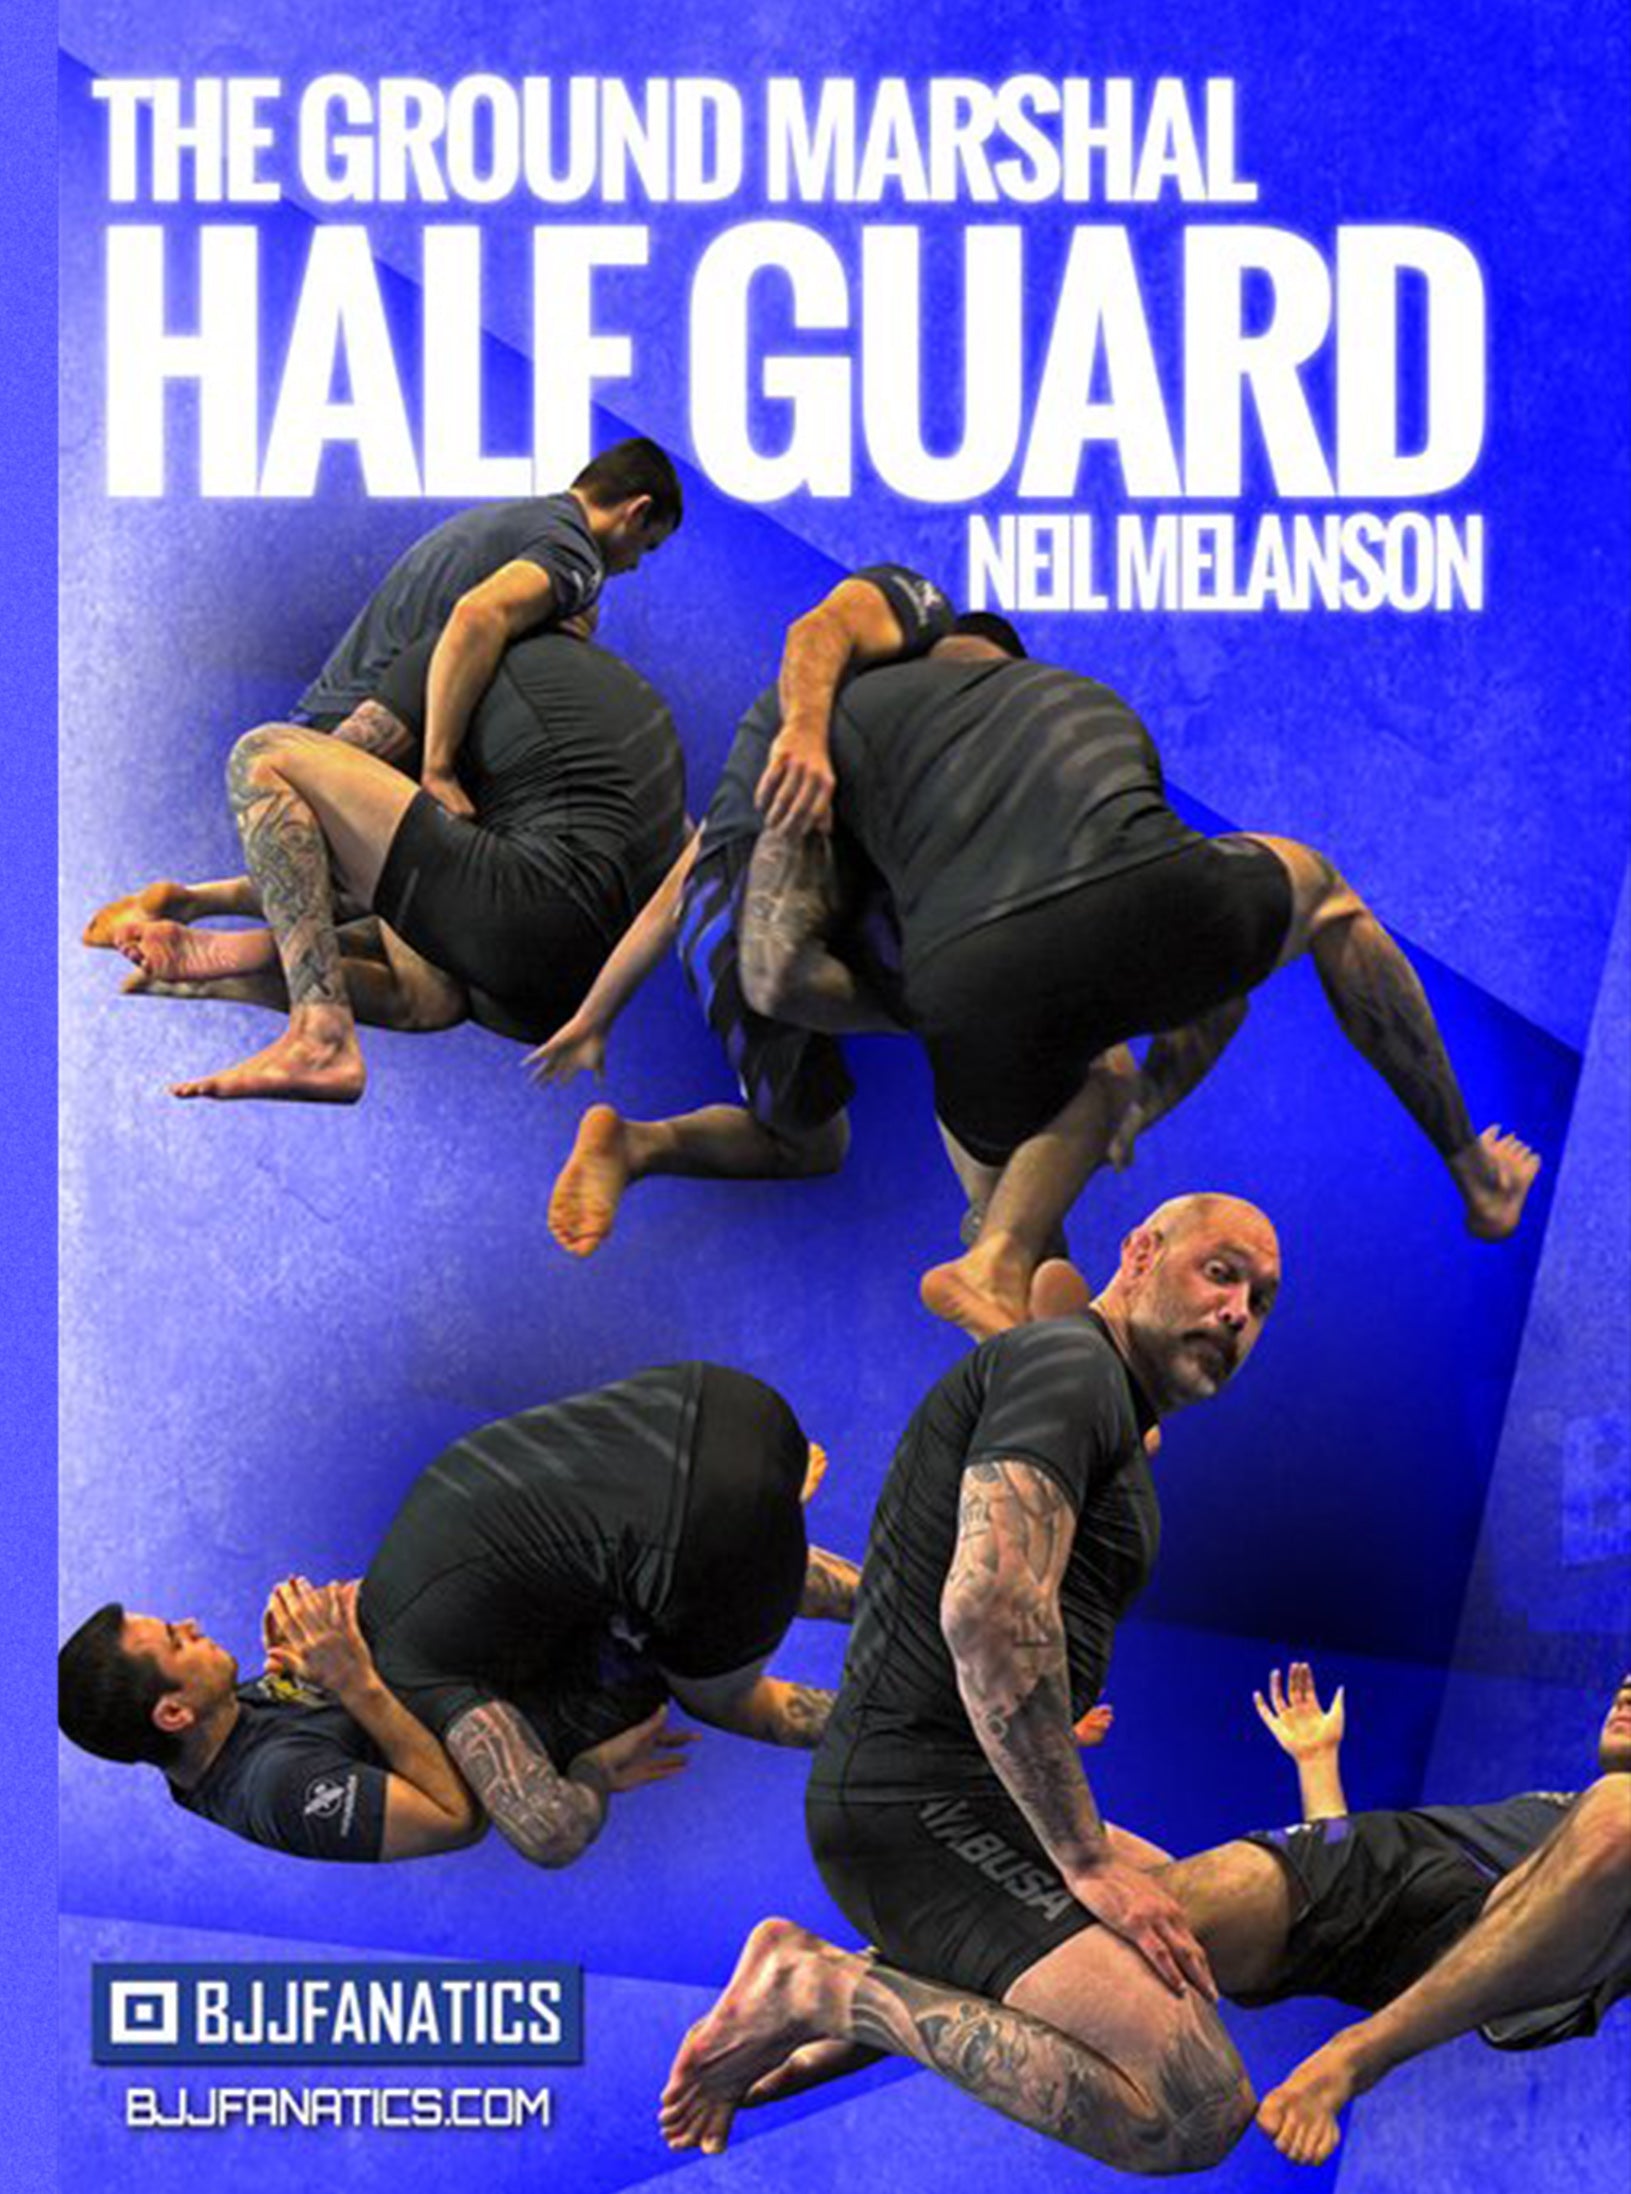 THE GROUND MARSHAL HALF GUARD BY NEIL MELANSON DVD